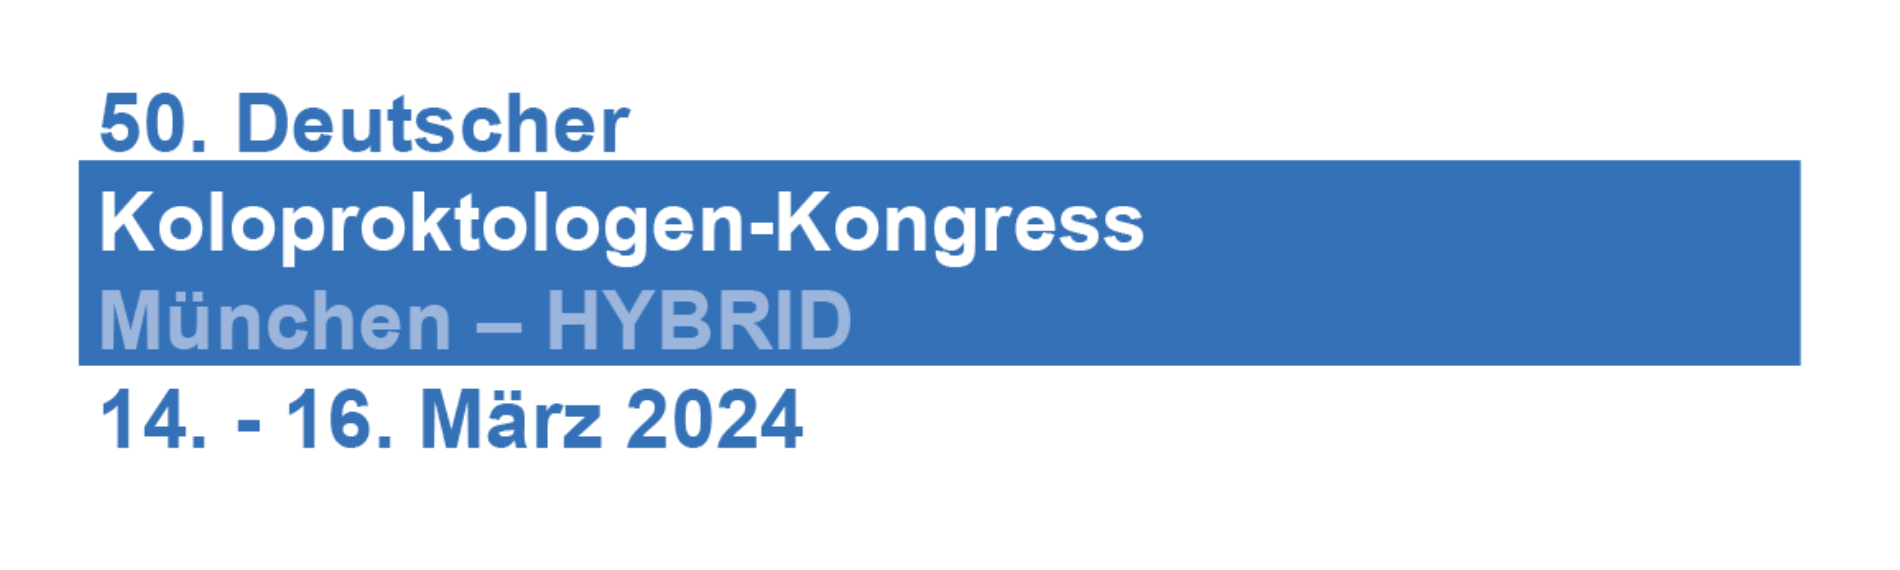 50. Deutscher Koloproktologen Kongress, 14-16 March 2024, Munich